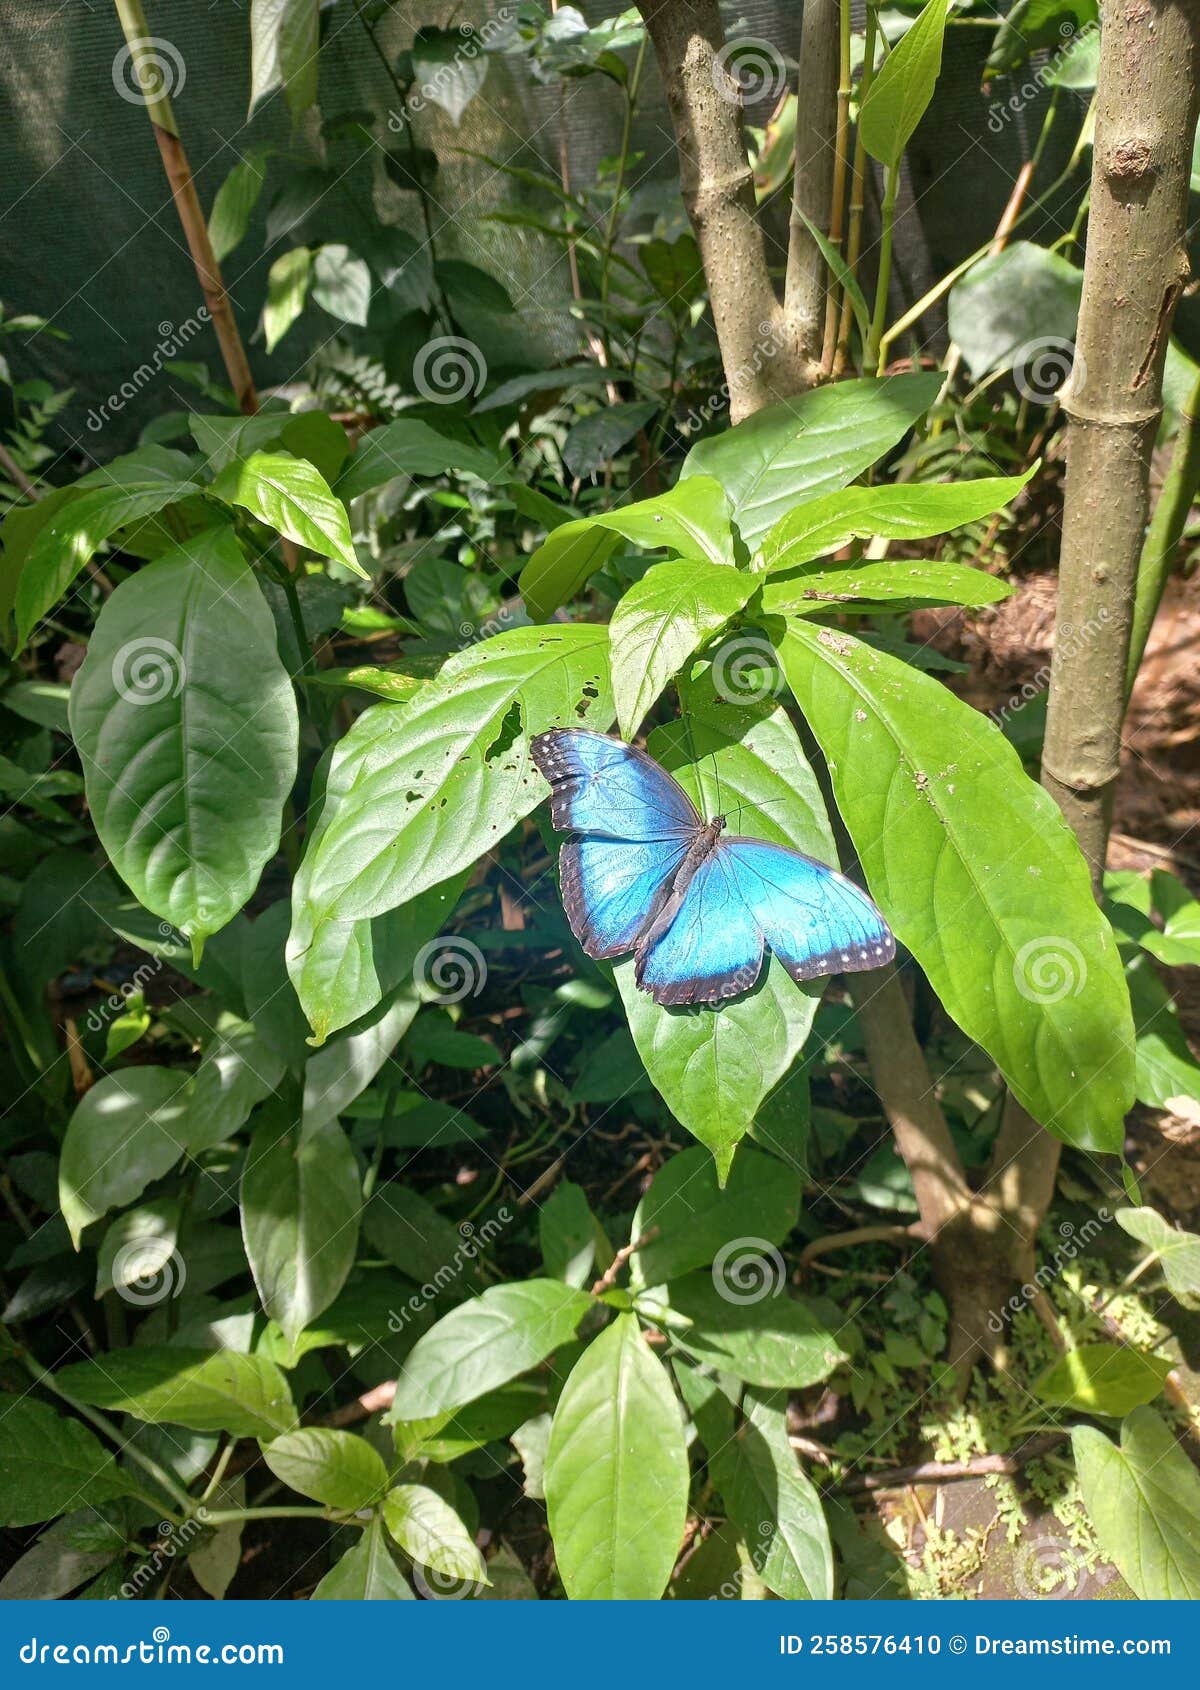 morpho blue butterfly mariposa papillon